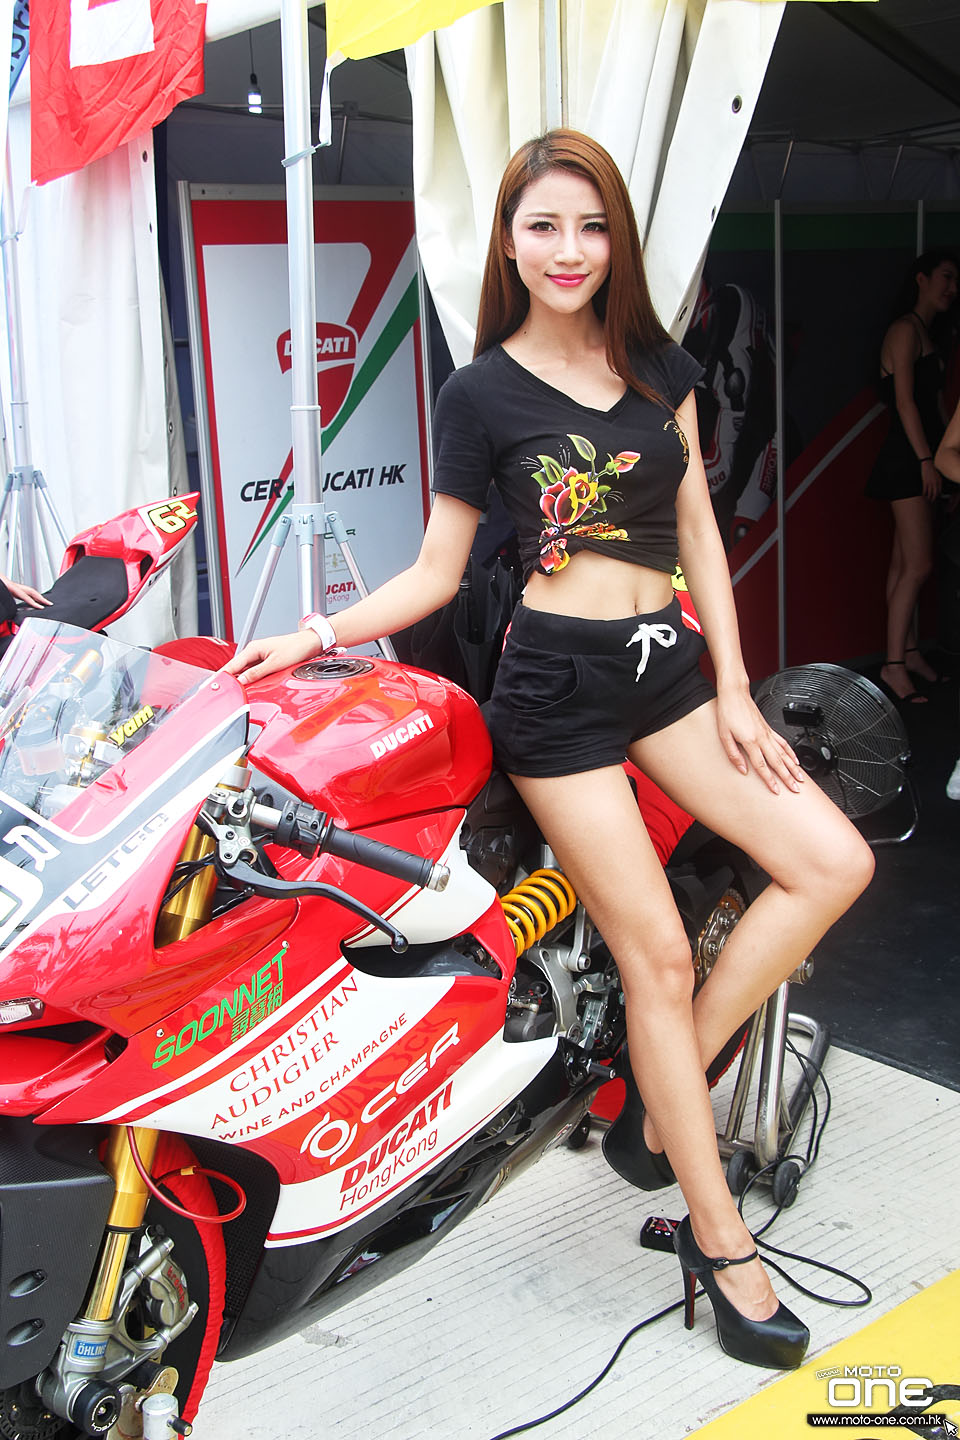 2015 CER-DucatiHK